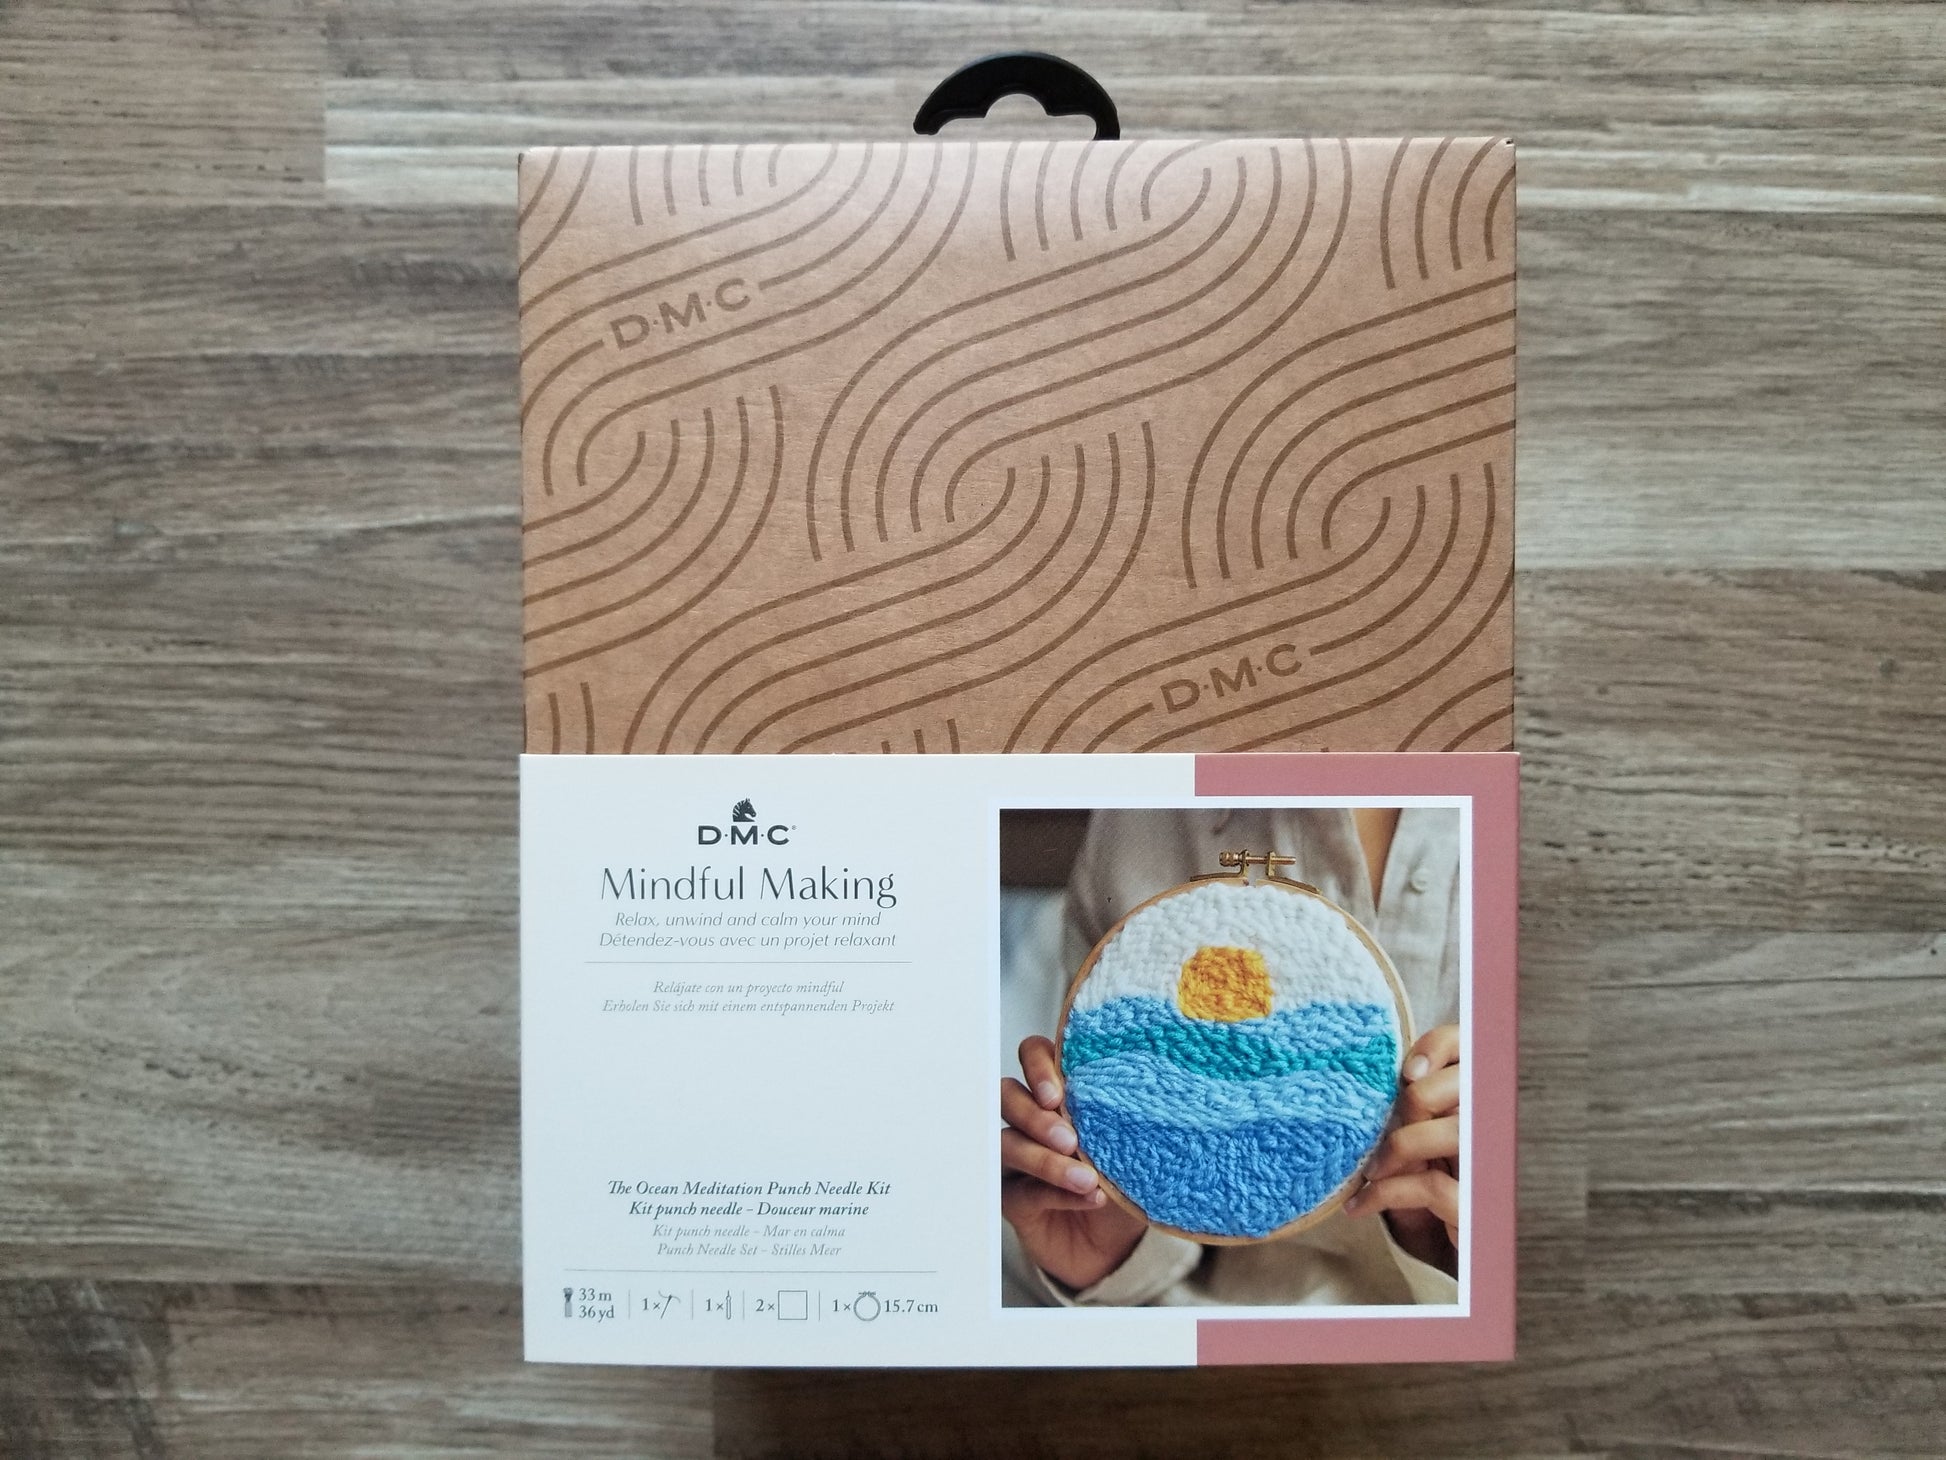 DMC Mindful Making The Ocean Meditation Punch Needle Kit